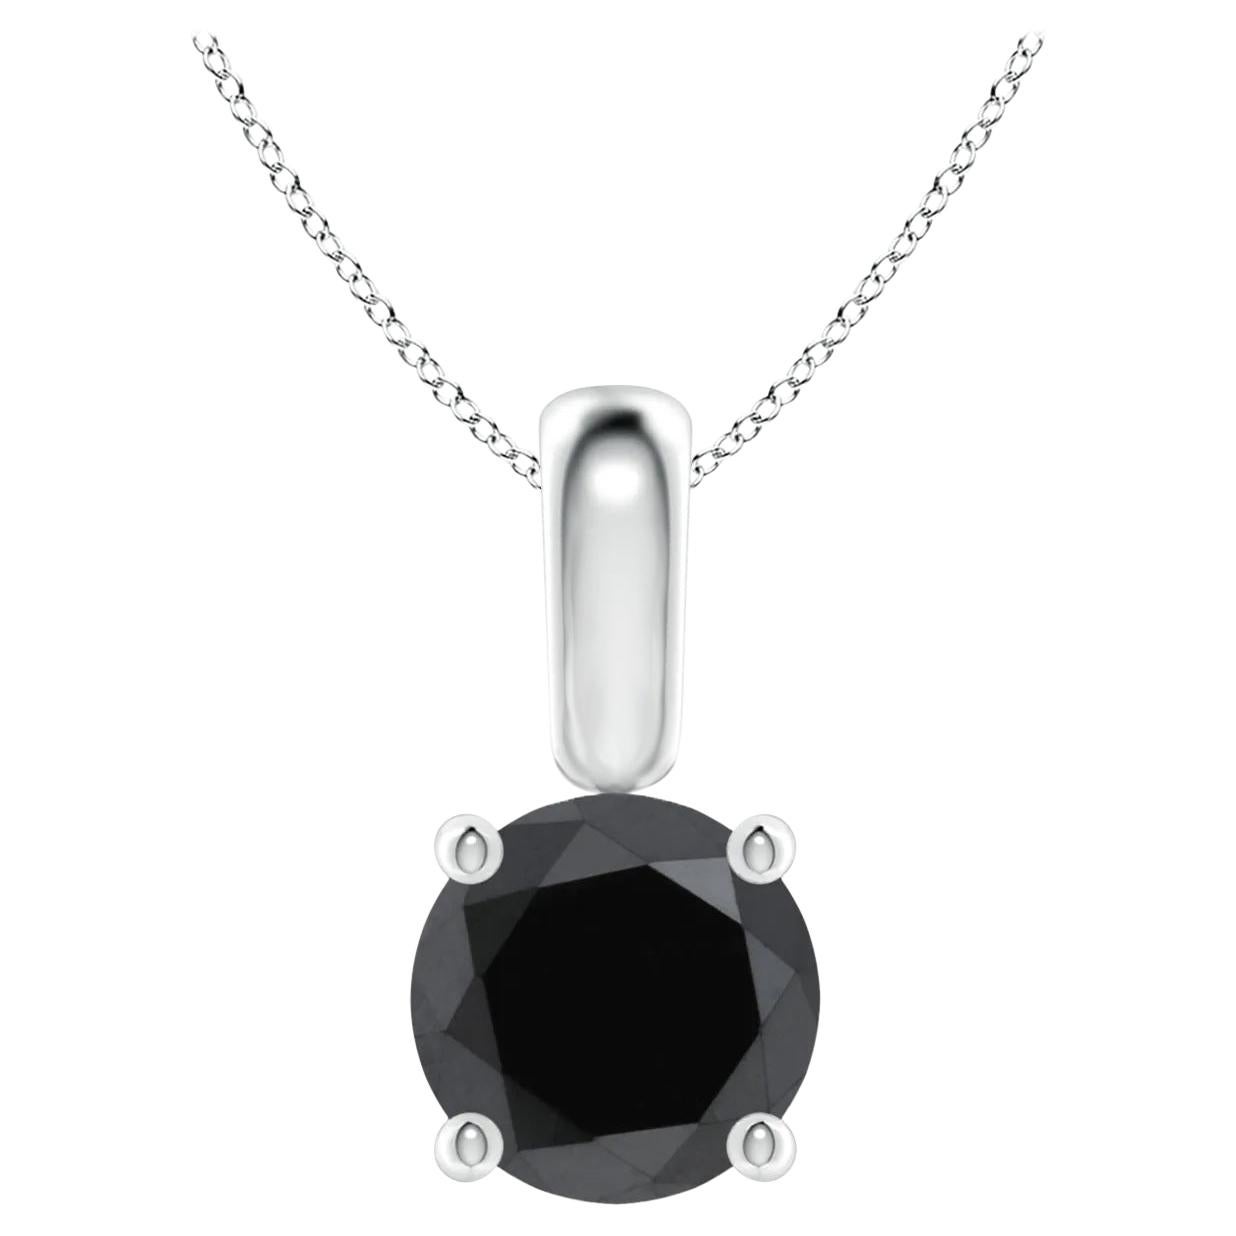 1.92 Carat Round Black Diamond Solitaire Pendant Necklace in 14K White Gold